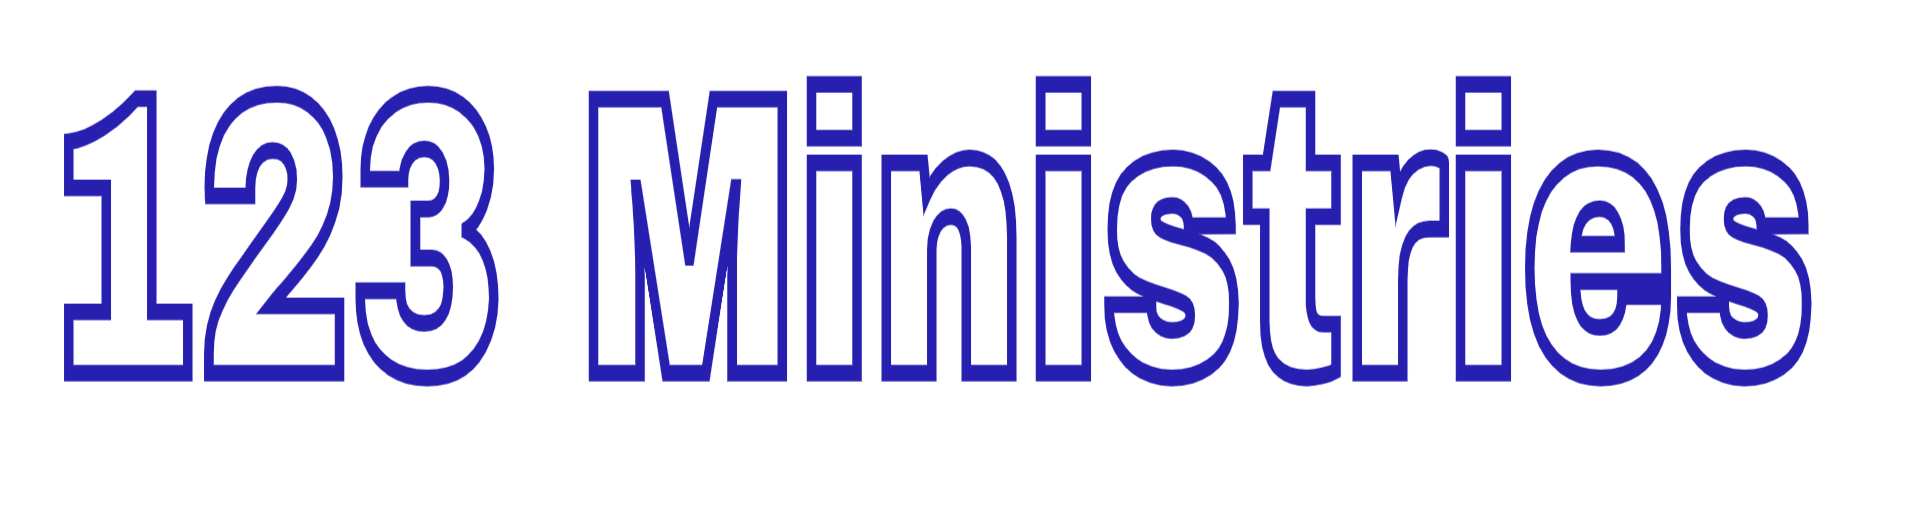 123 Ministries